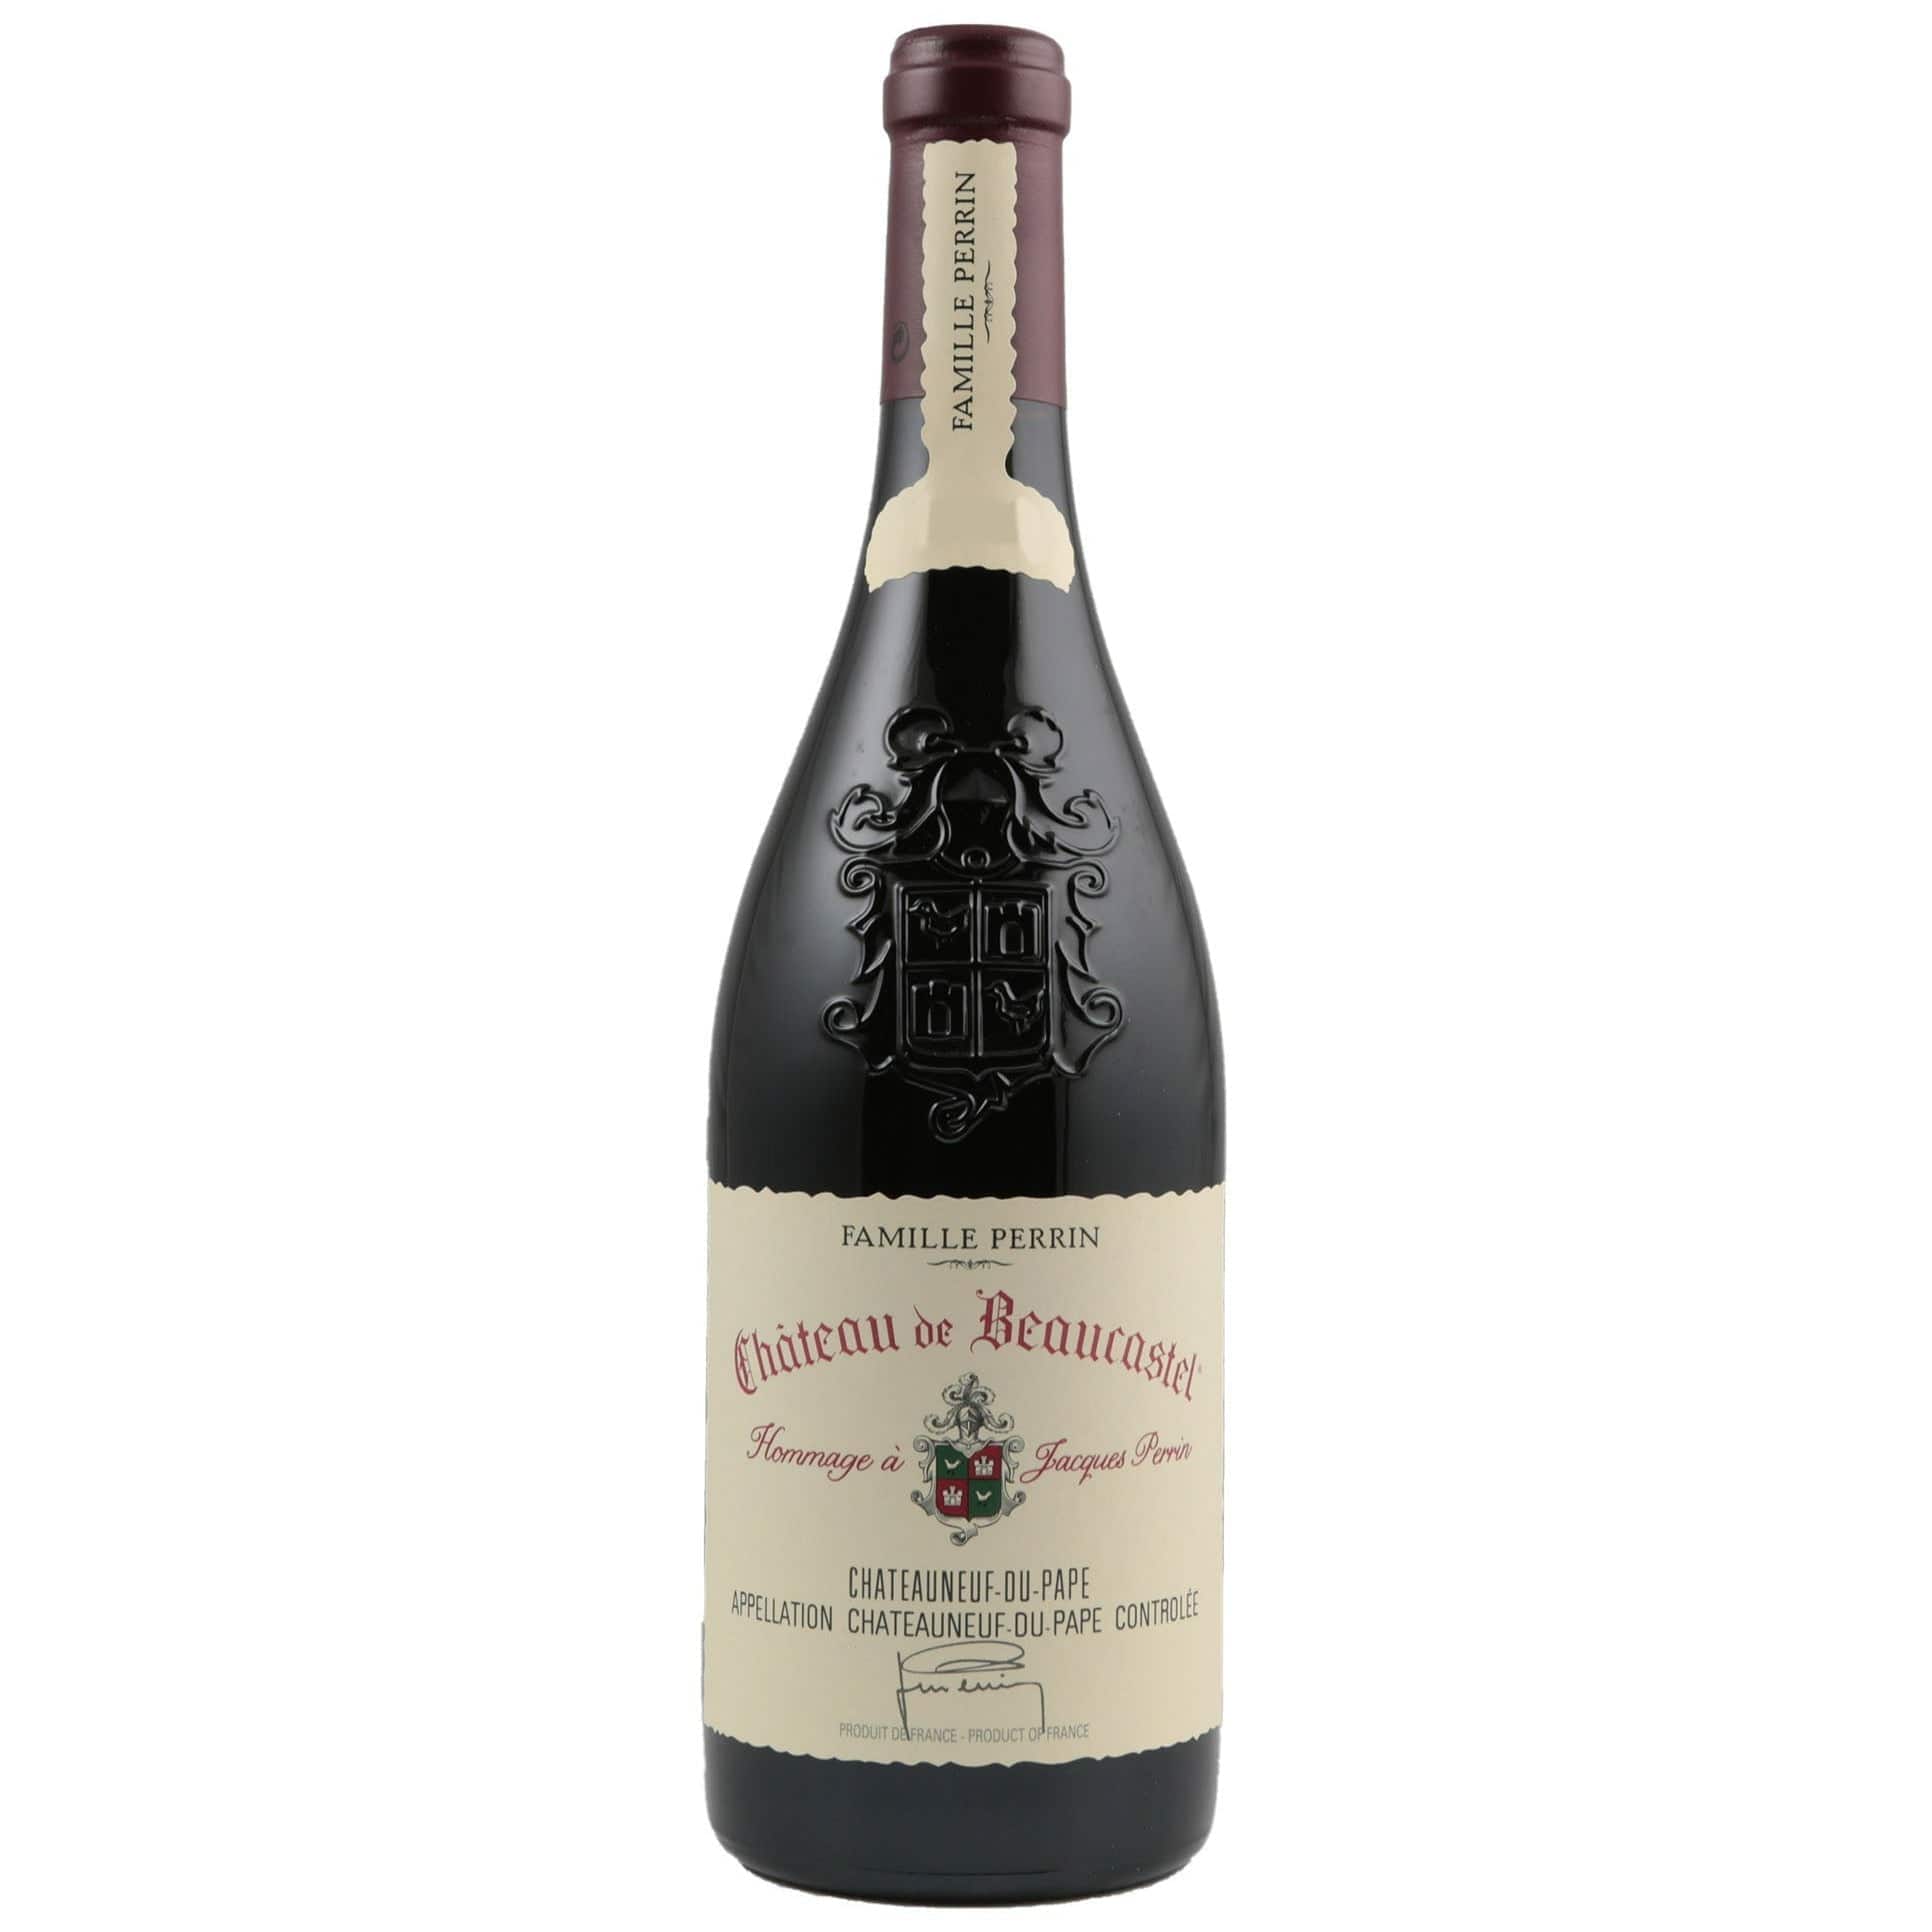 Single bottle of Red wine Chateau de Beaucastel, Chateauneuf du Pape, 2016 30% Grenache, 30% Mourvedre, 10% Syrah, 10% Counoise, 5% Cinsault & 15% Other